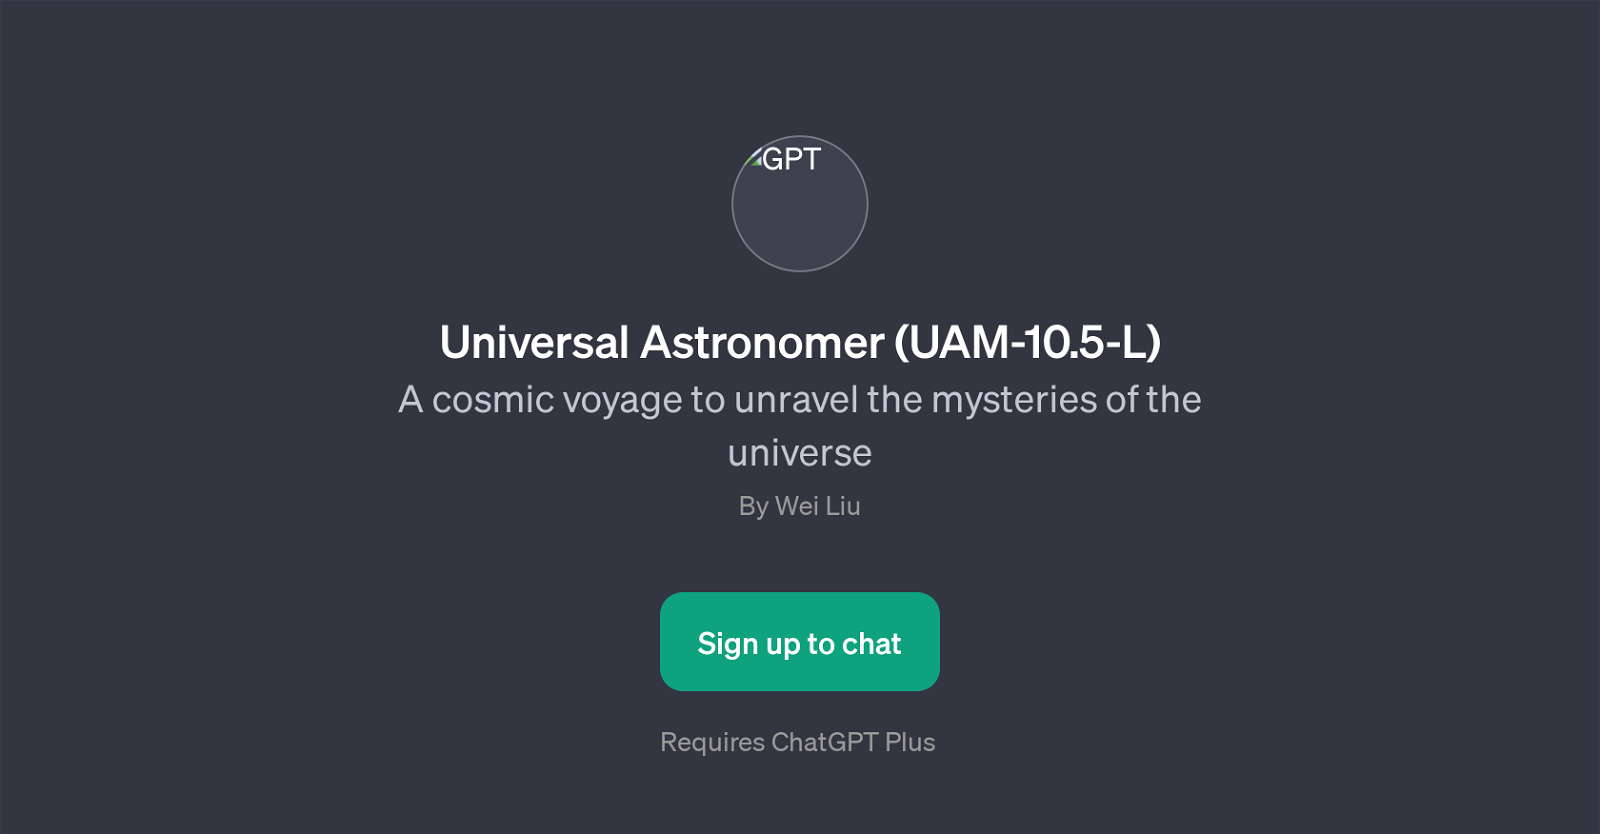 Universal Astronomer (UAM-10.5-L) website